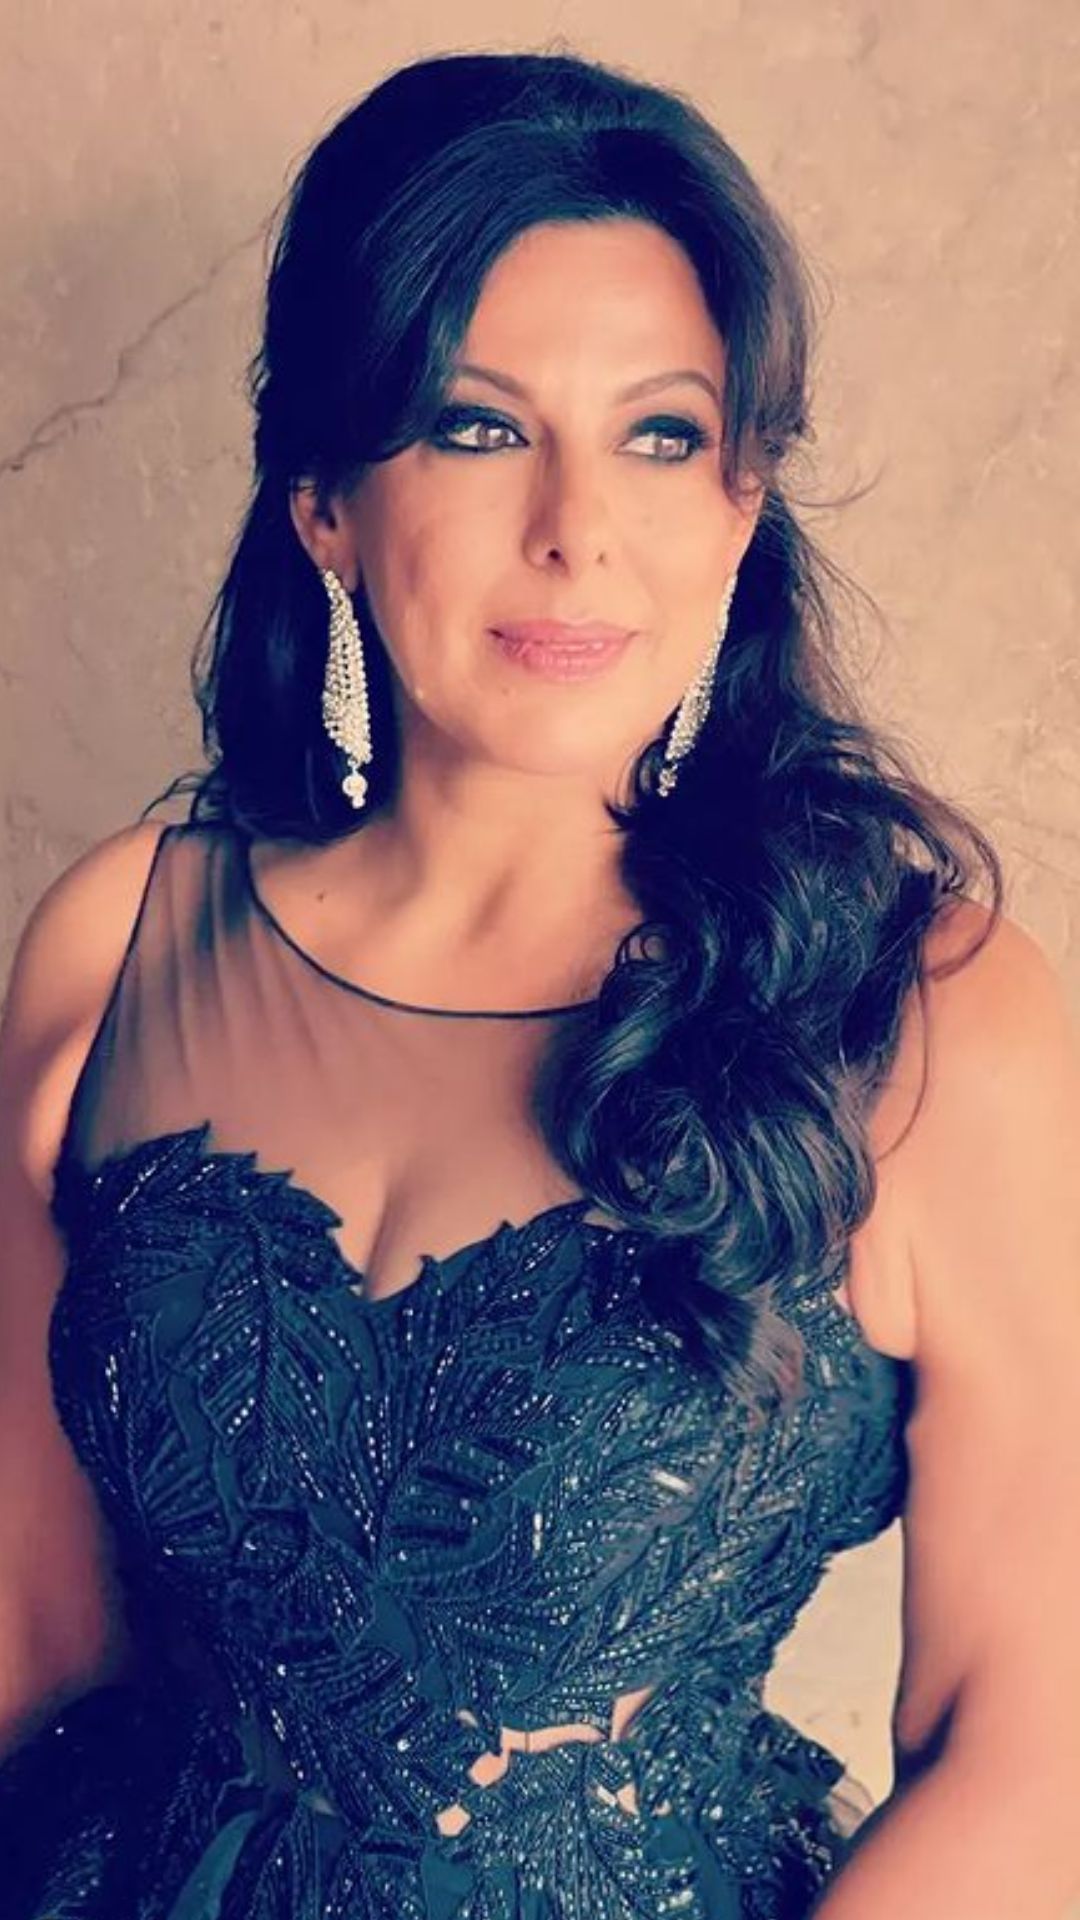 Happy Birthday : 'જો જીતા વોહી સિકંદર' ફેમ અભિનેત્રી પૂજા બેદી વિશે જાણો આ અજાણી વાતો